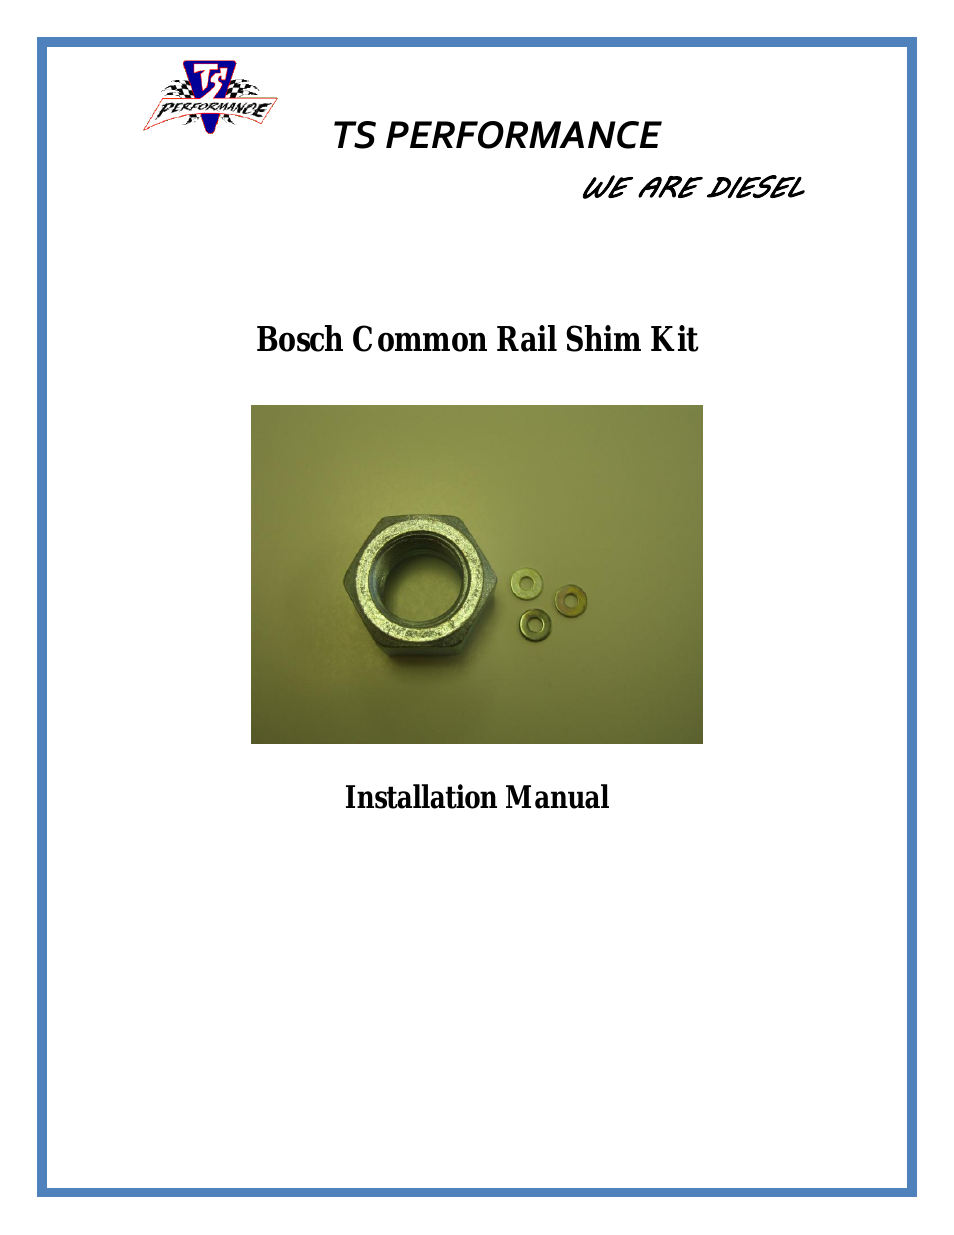 Bosch Shim Kit